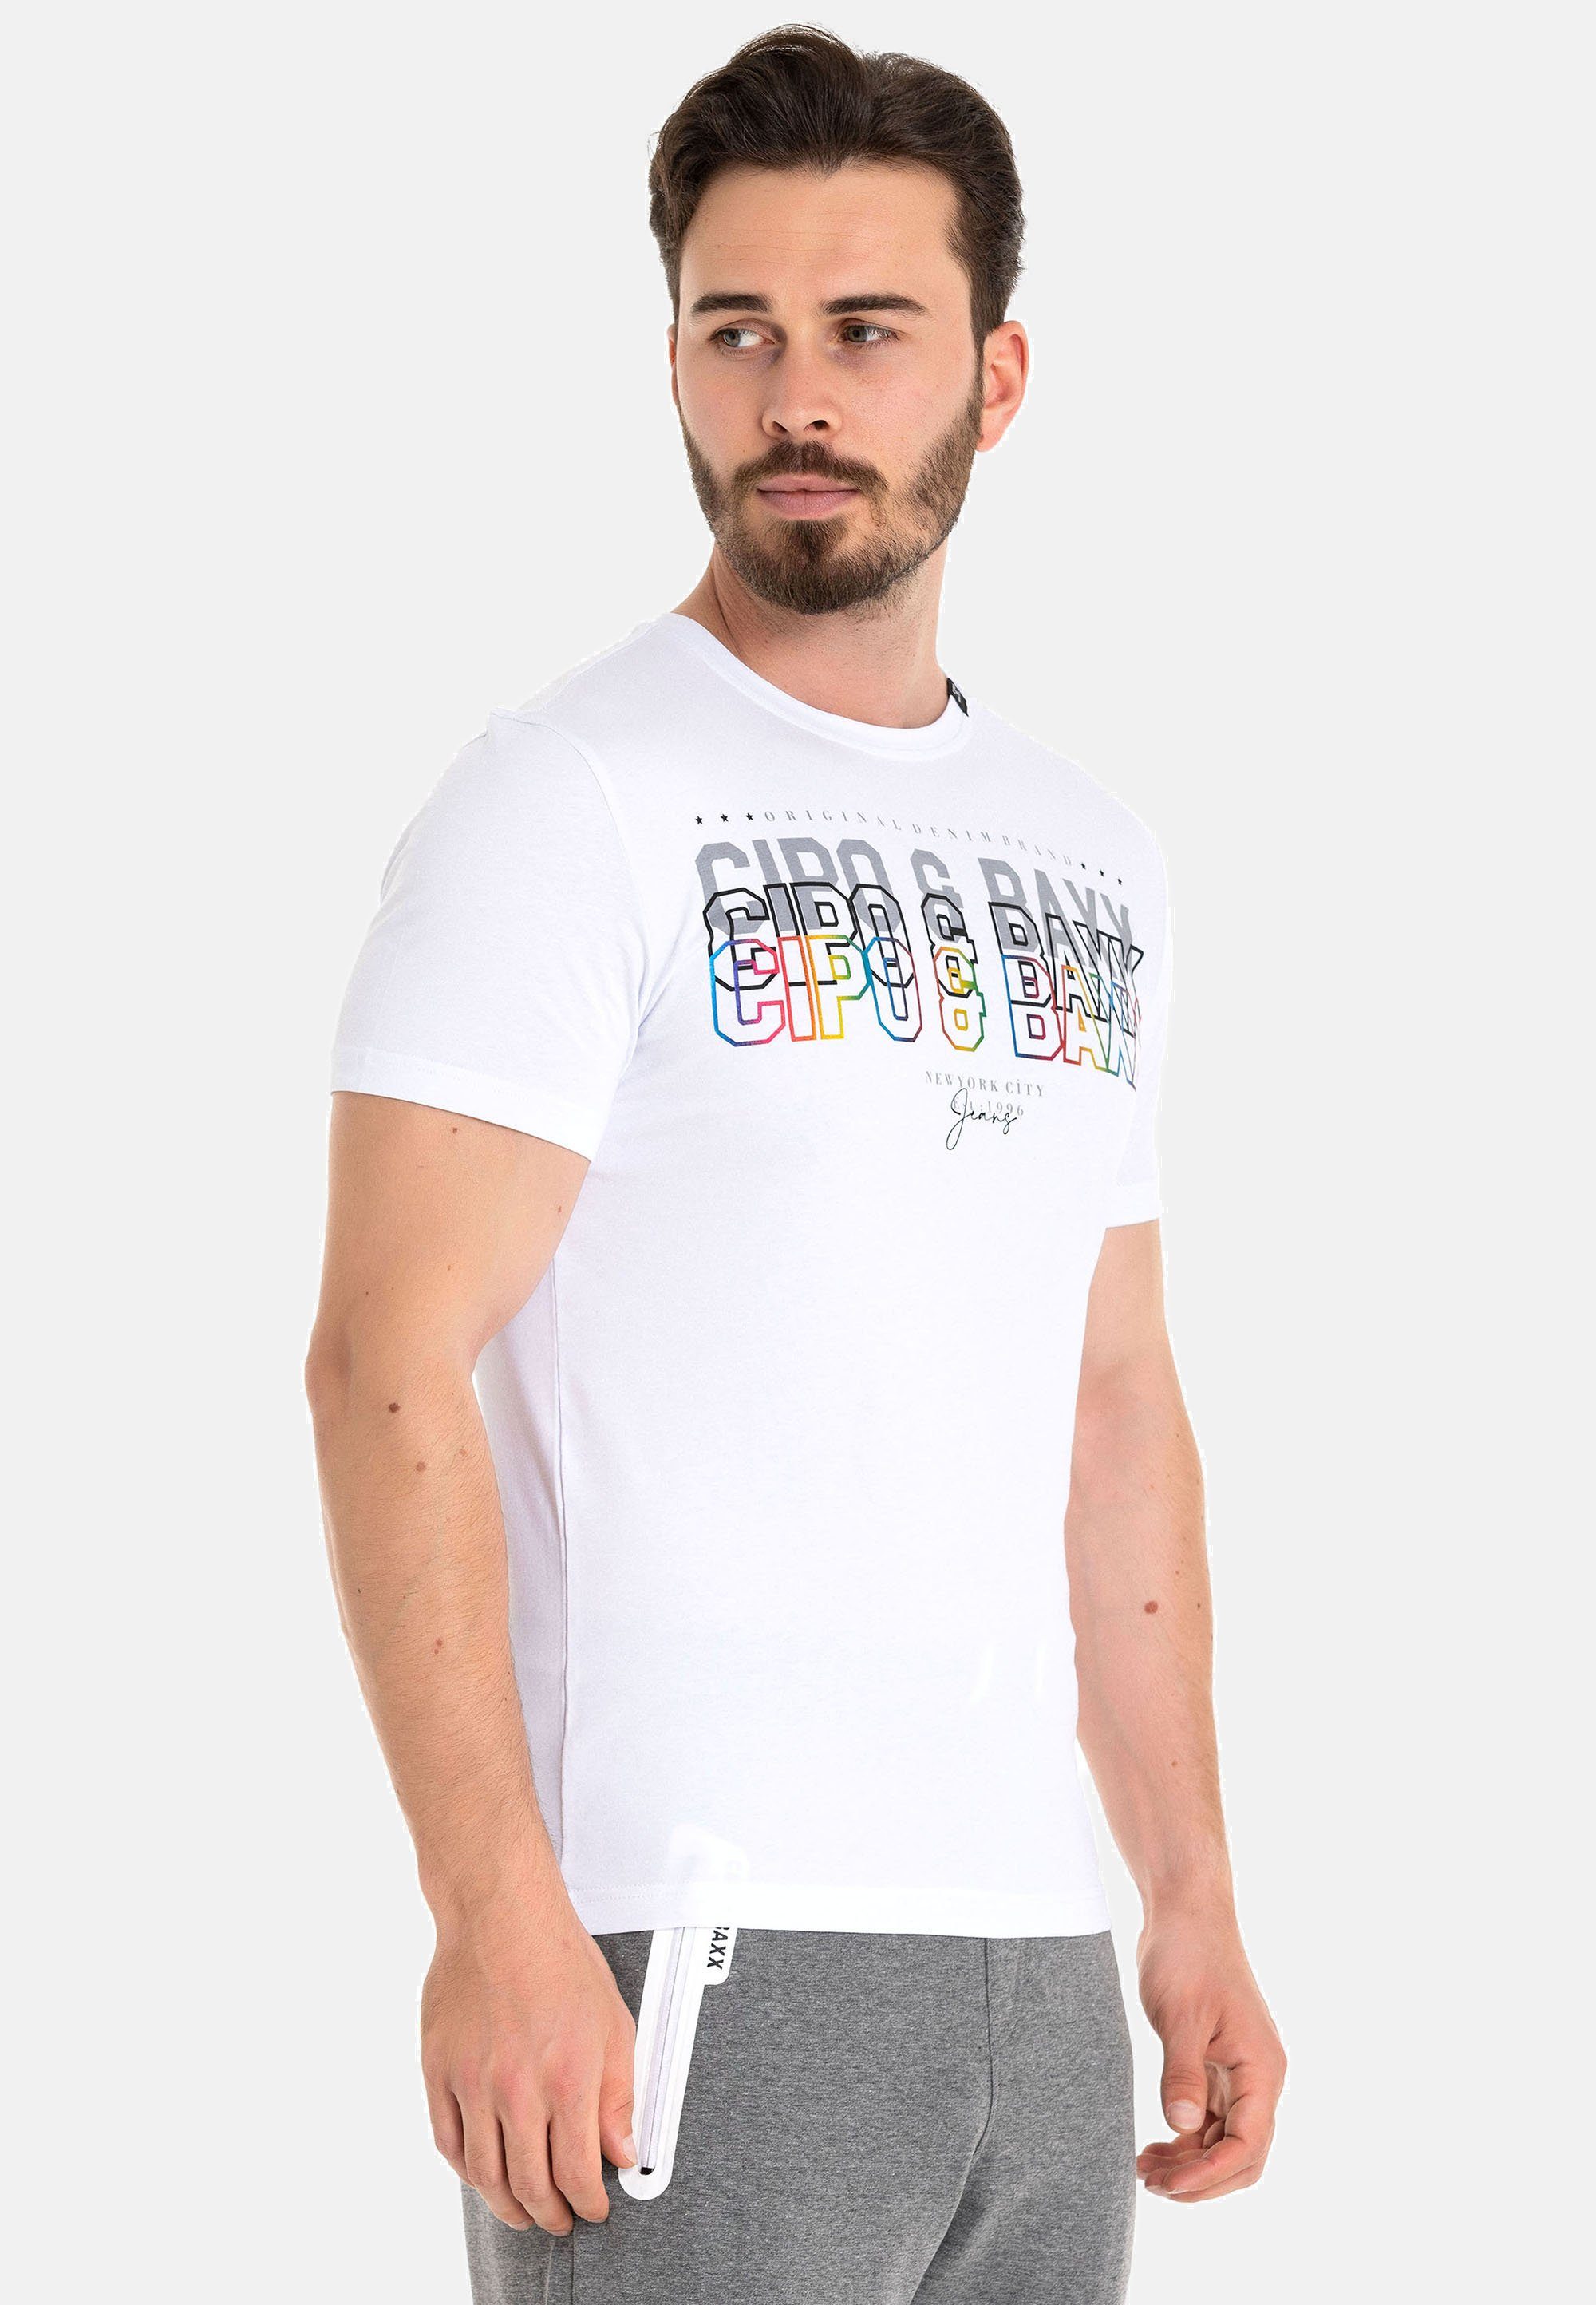 Cipo CT717 Baxx Markenprint trendigem T-Shirt & weiß mit